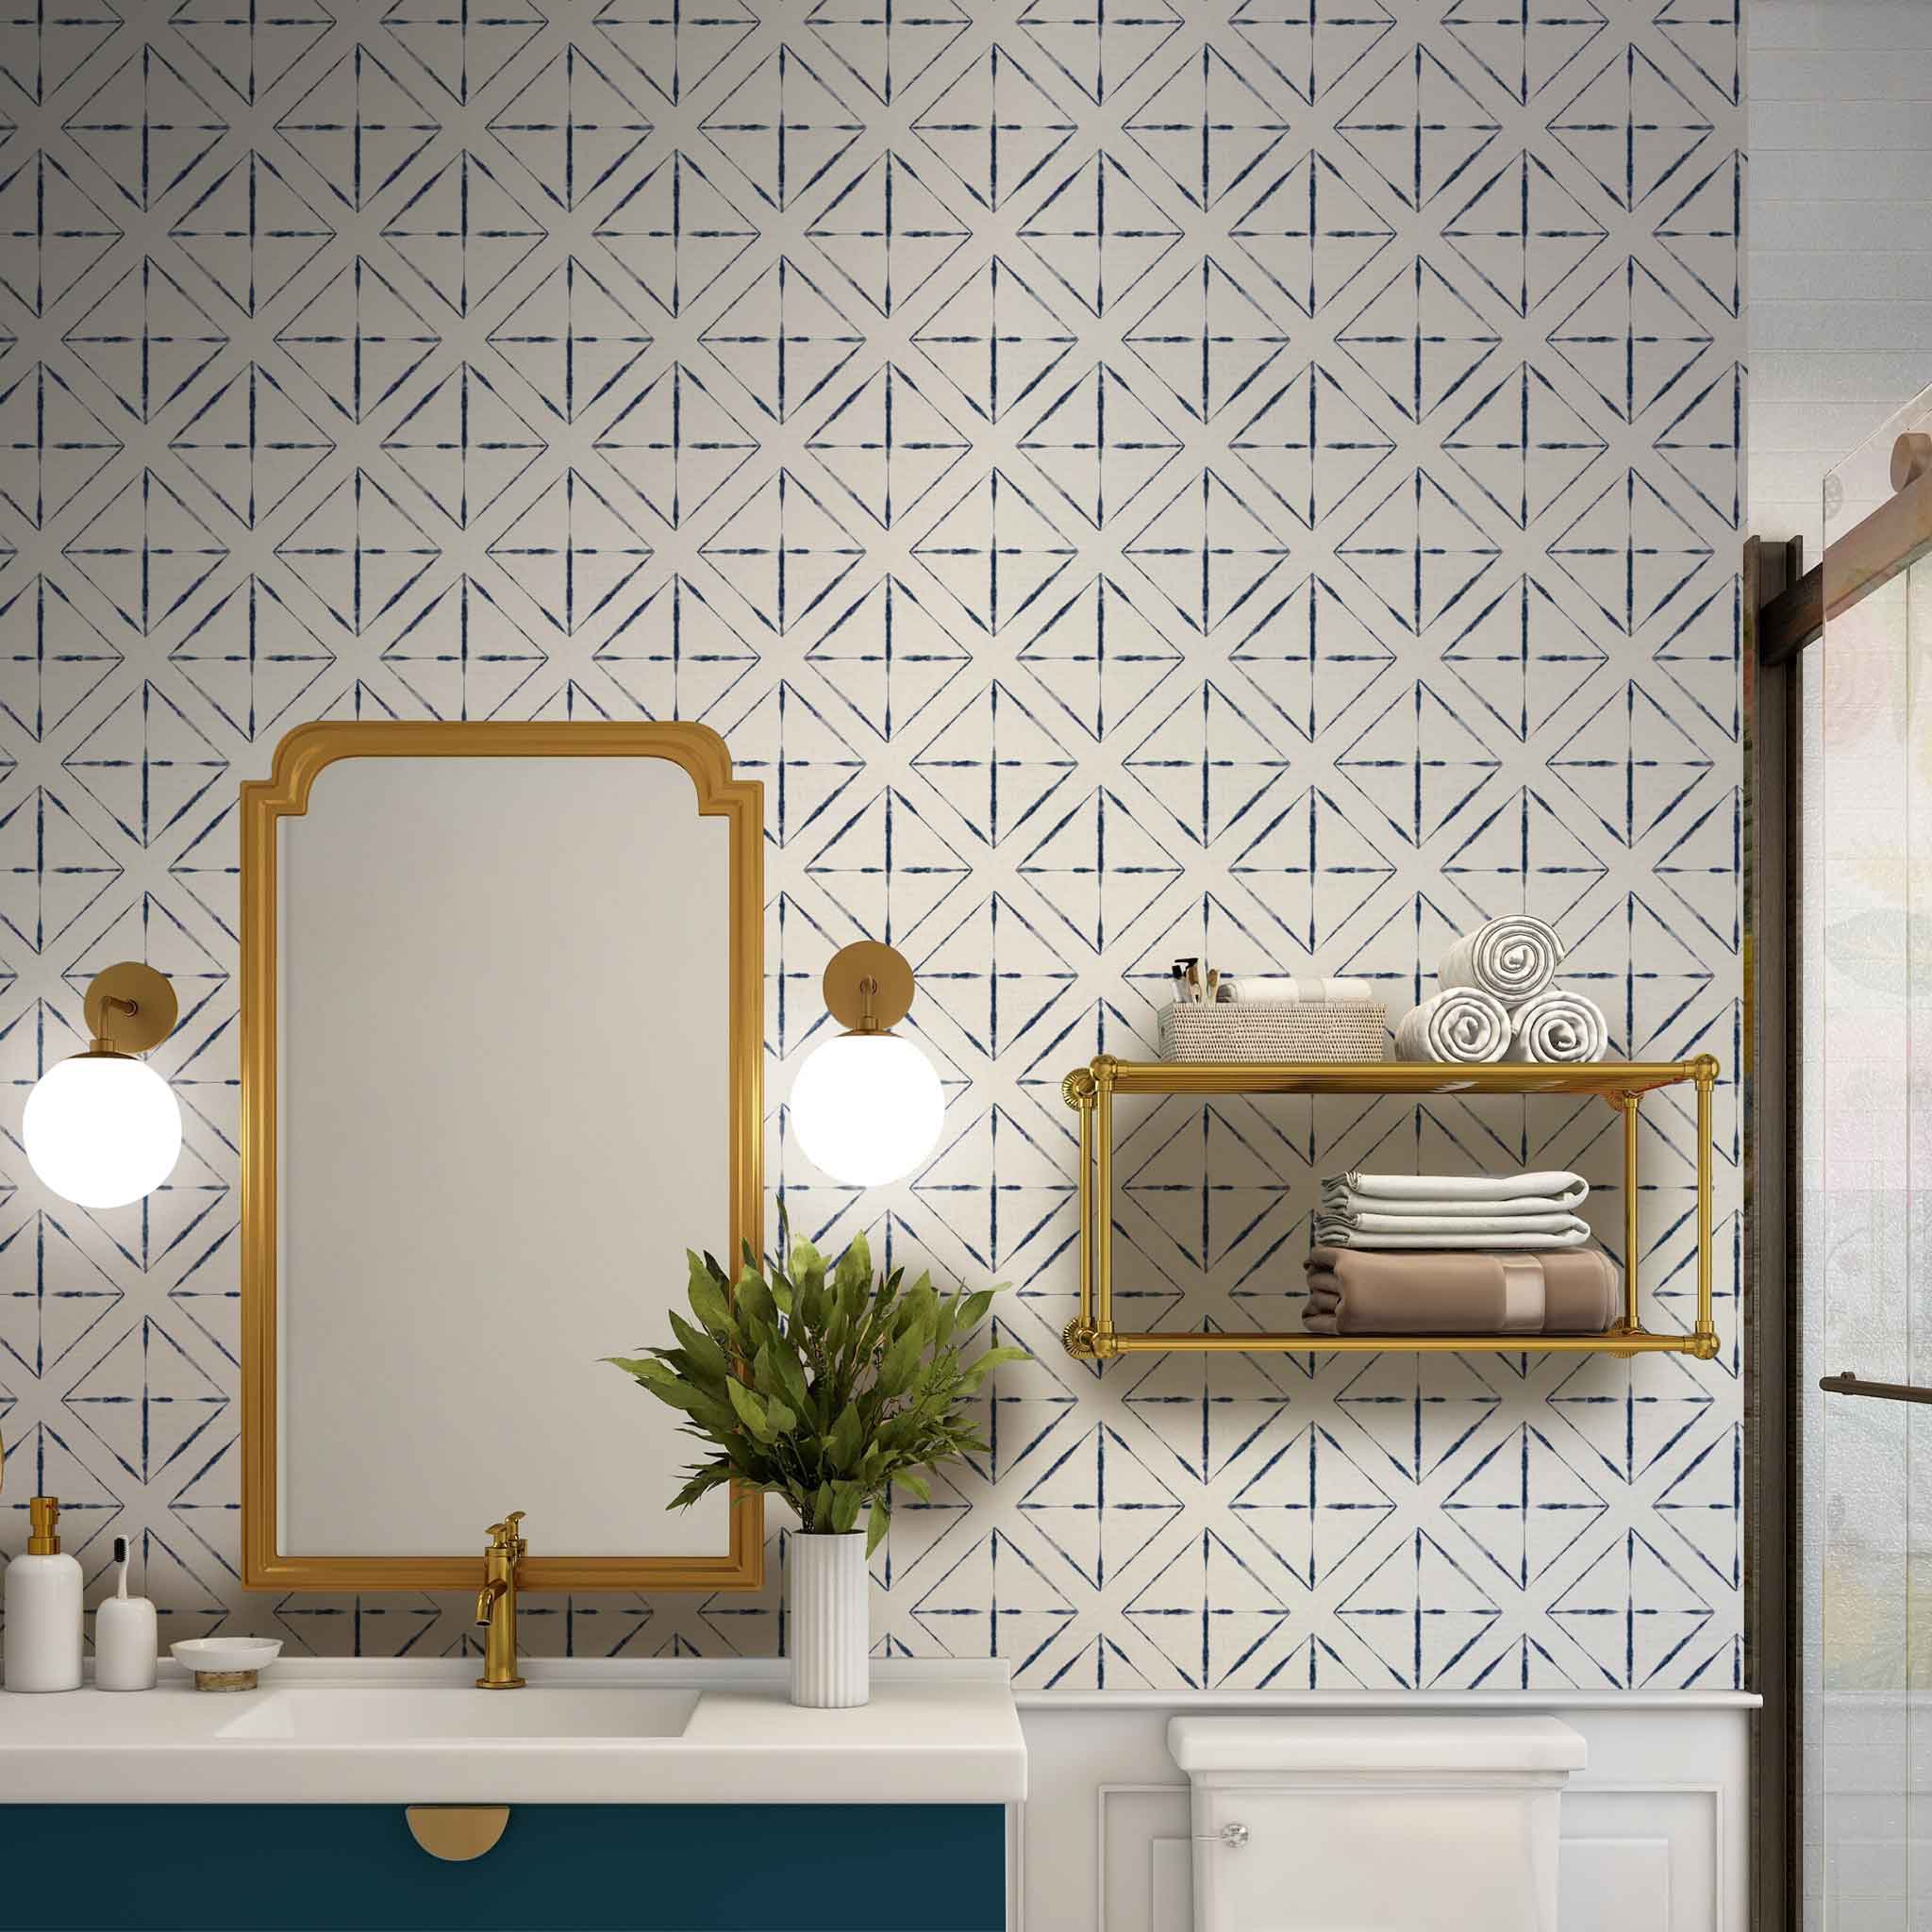 Shibori Indigo Tie Dye Cabana Smaller Pattern on White Peel & Stick and Pre-Pasted Wallpaper in a bathroom